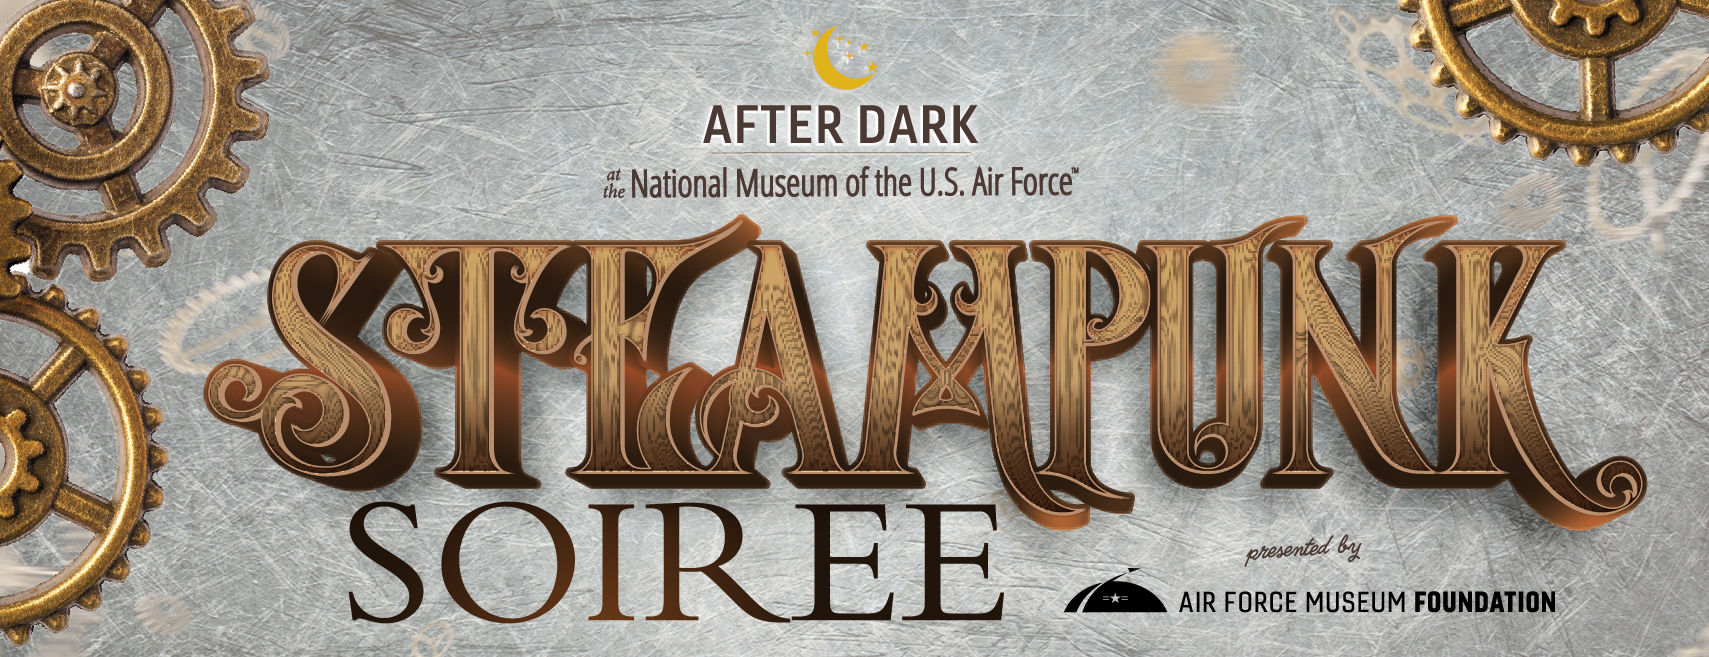 After Dark Steampunk Soiree web page 2